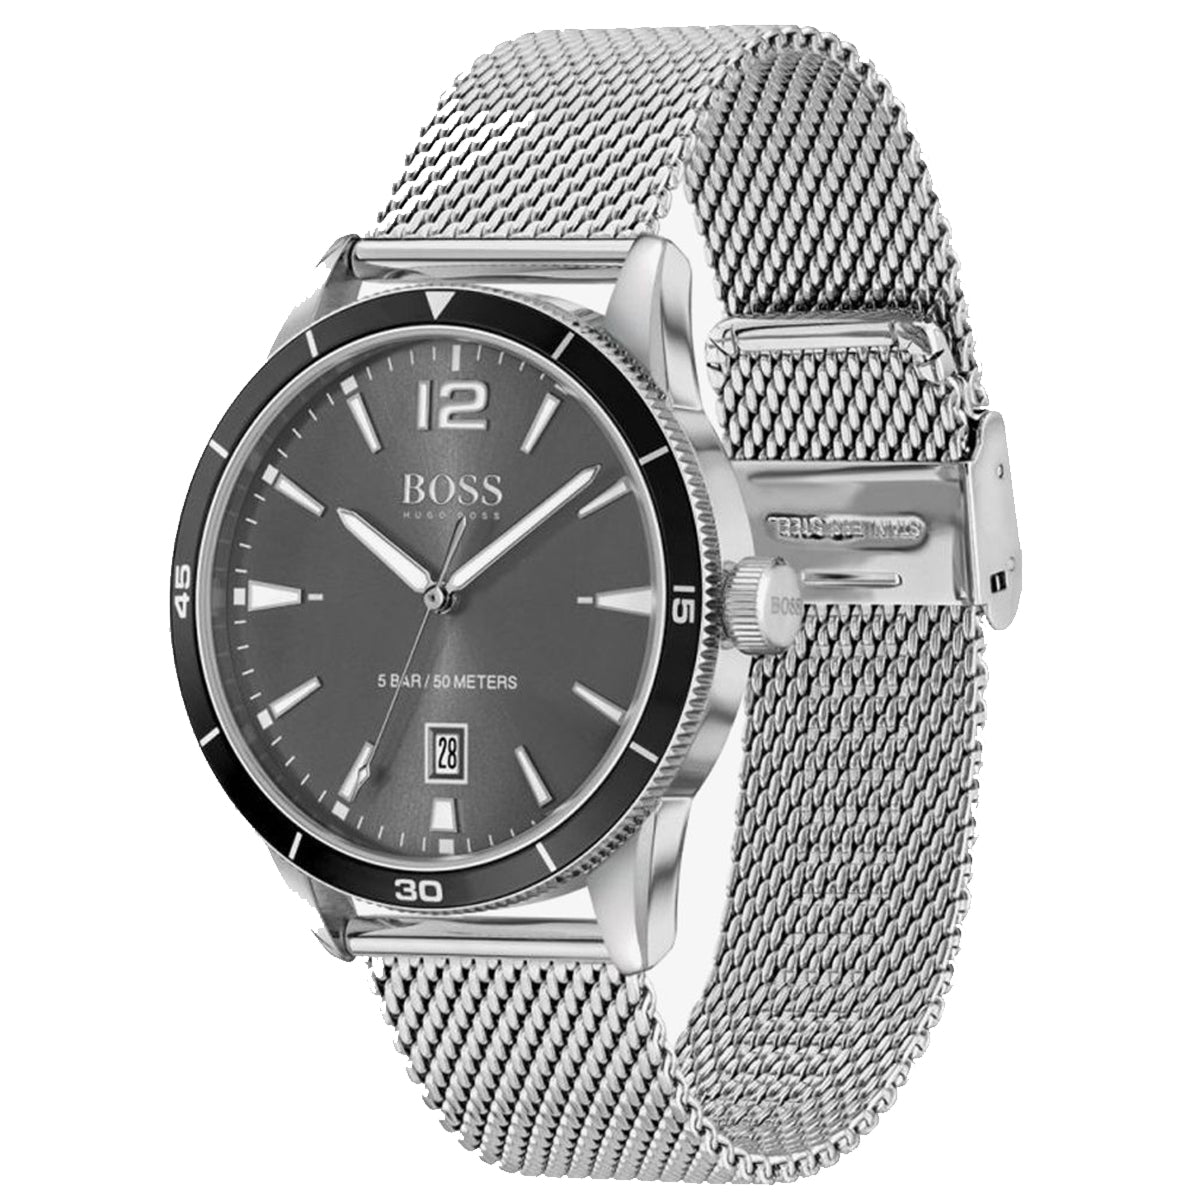 Hugo Boss - Watch and Cufflinks Gift Set - HB157.0126